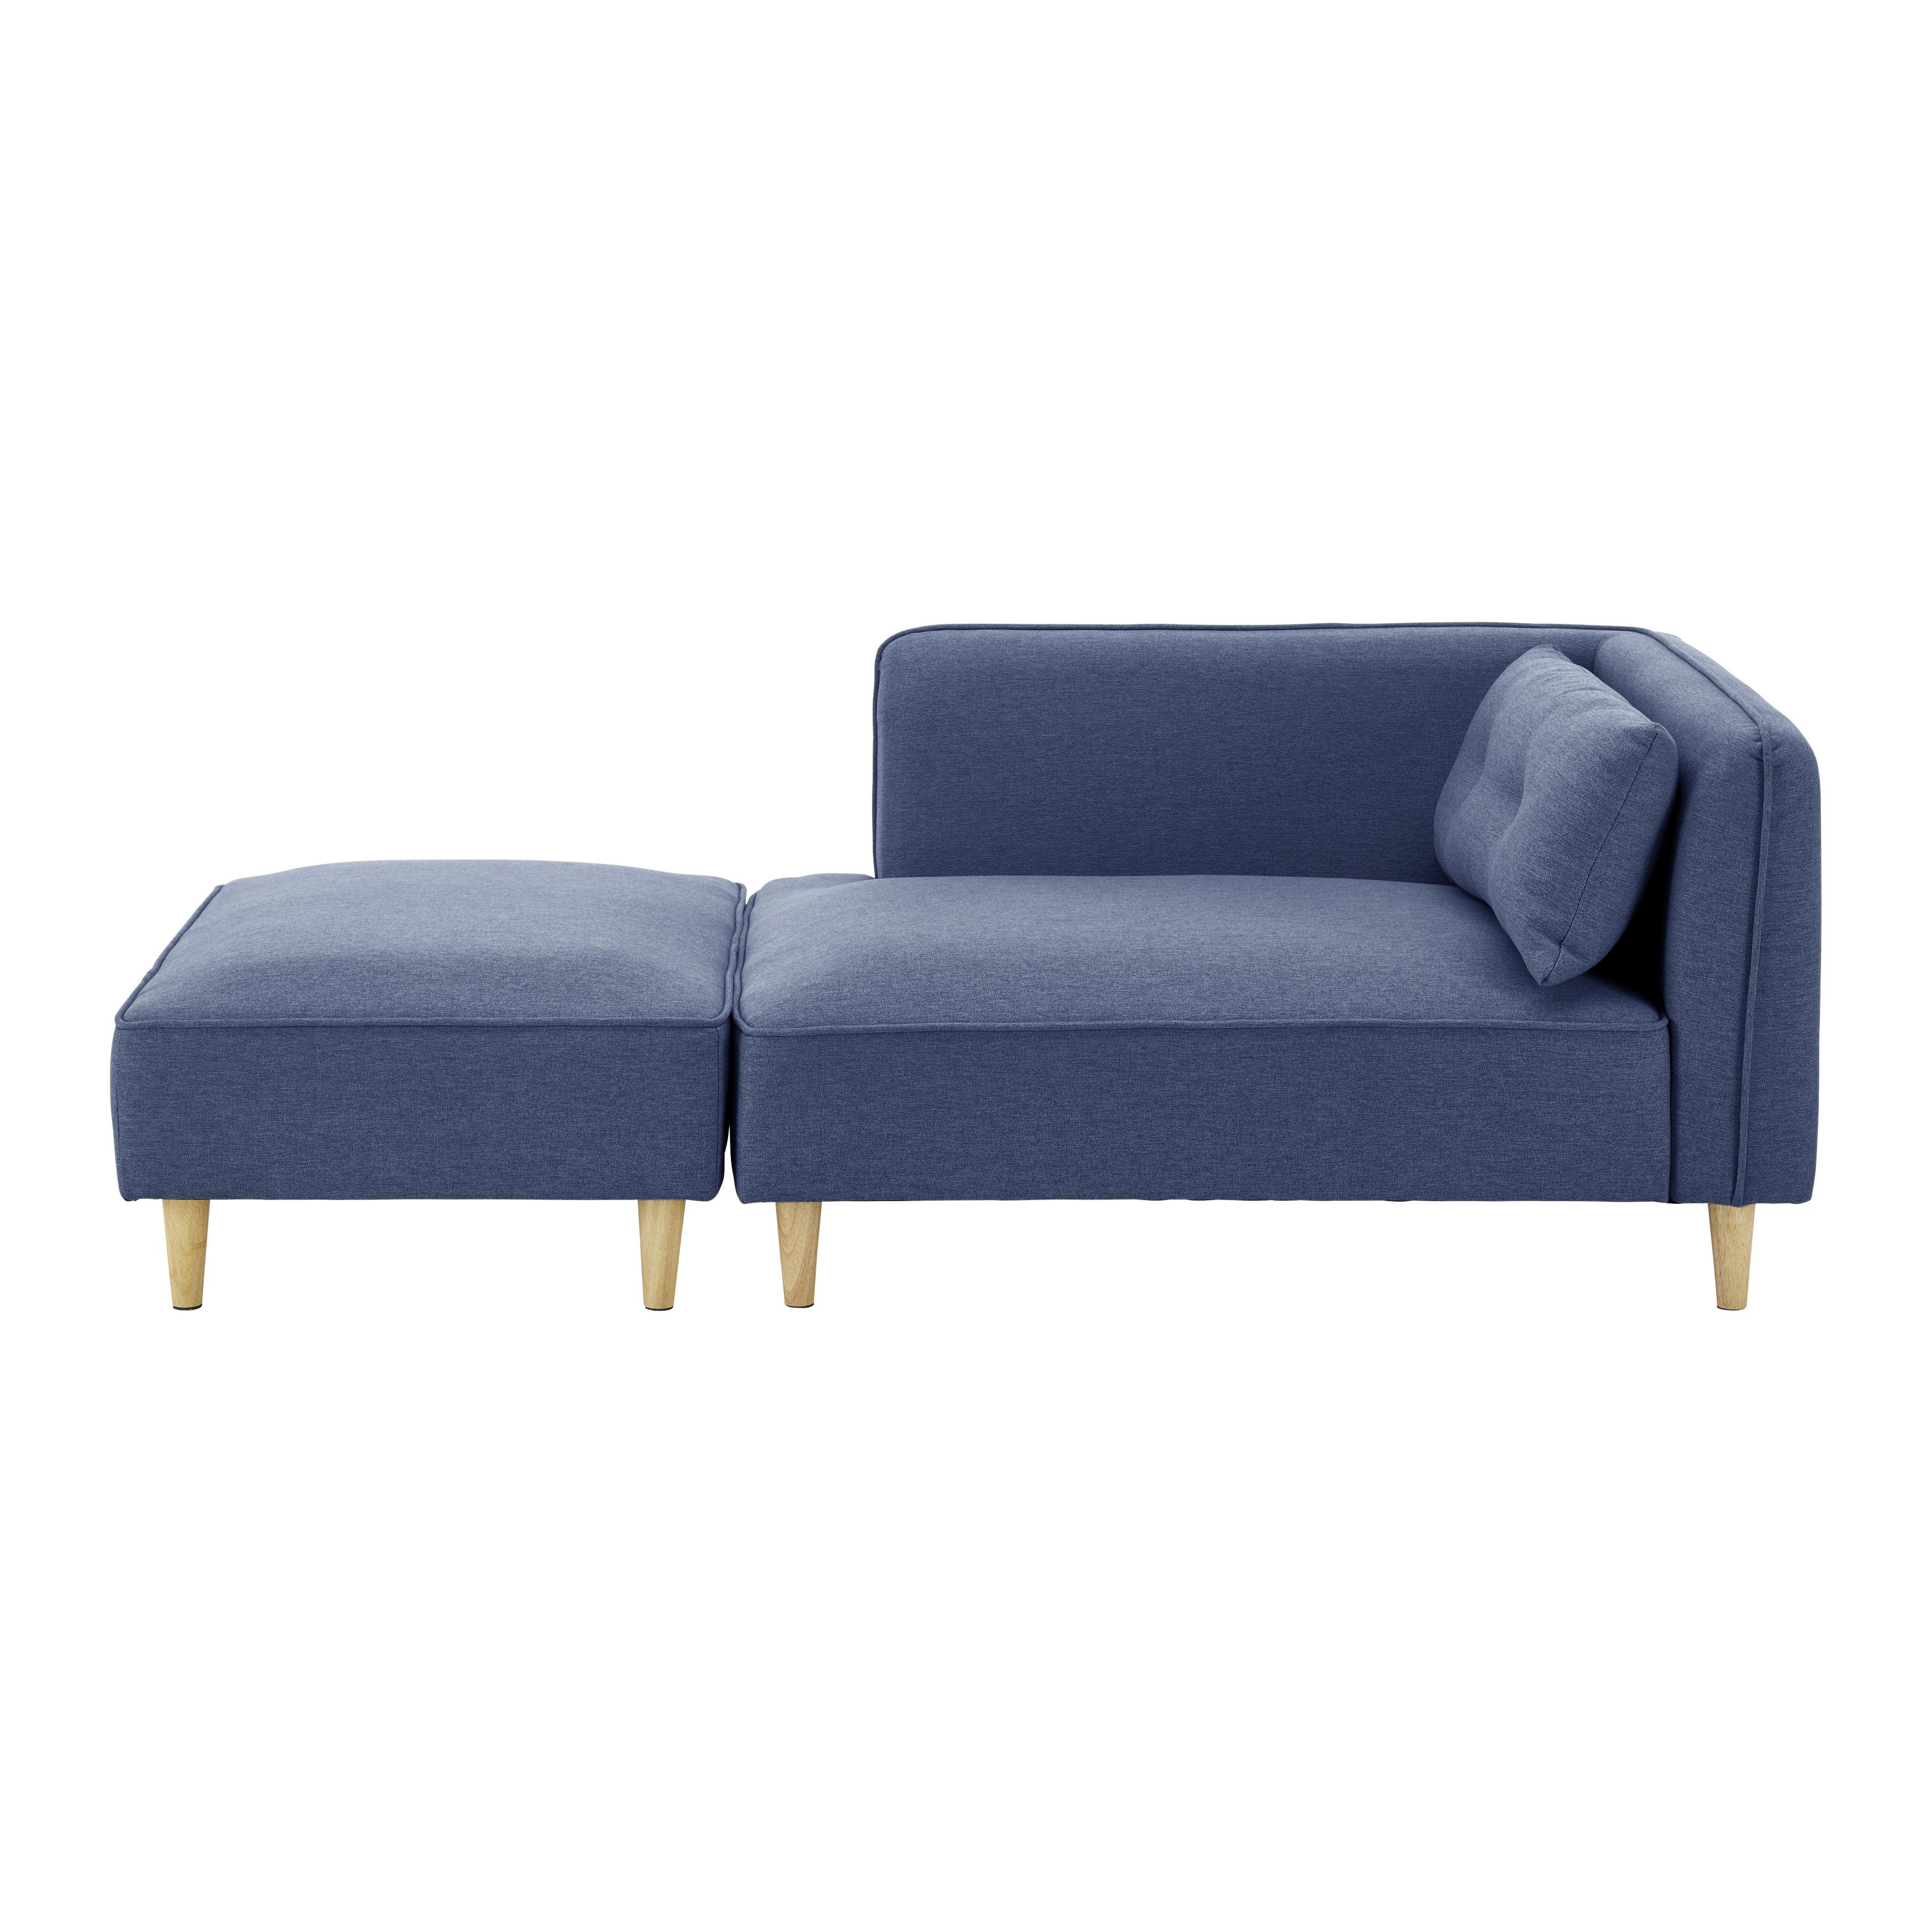 Modulares Sofa "Fanny" mit Hocker, blau - Blau/Naturfarben, MODERN, Holz/Textil (154/55/73cm) - Bessagi Home